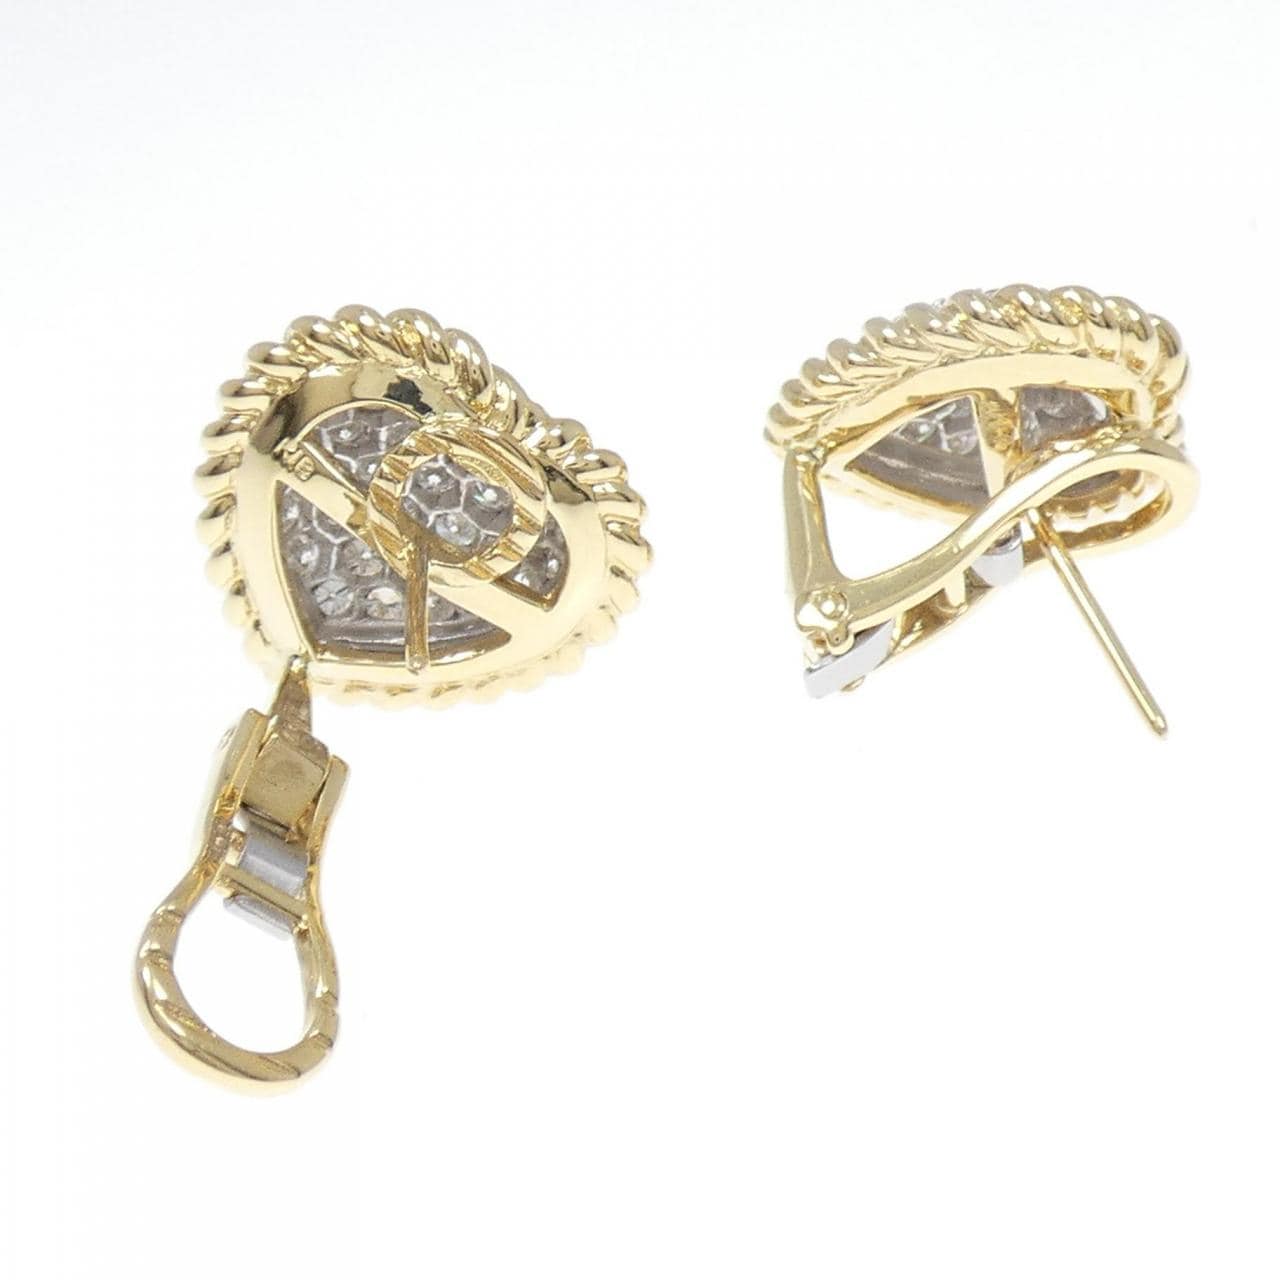 K18YG/K18WG Pave Heart Diamond Earrings 1.77CT